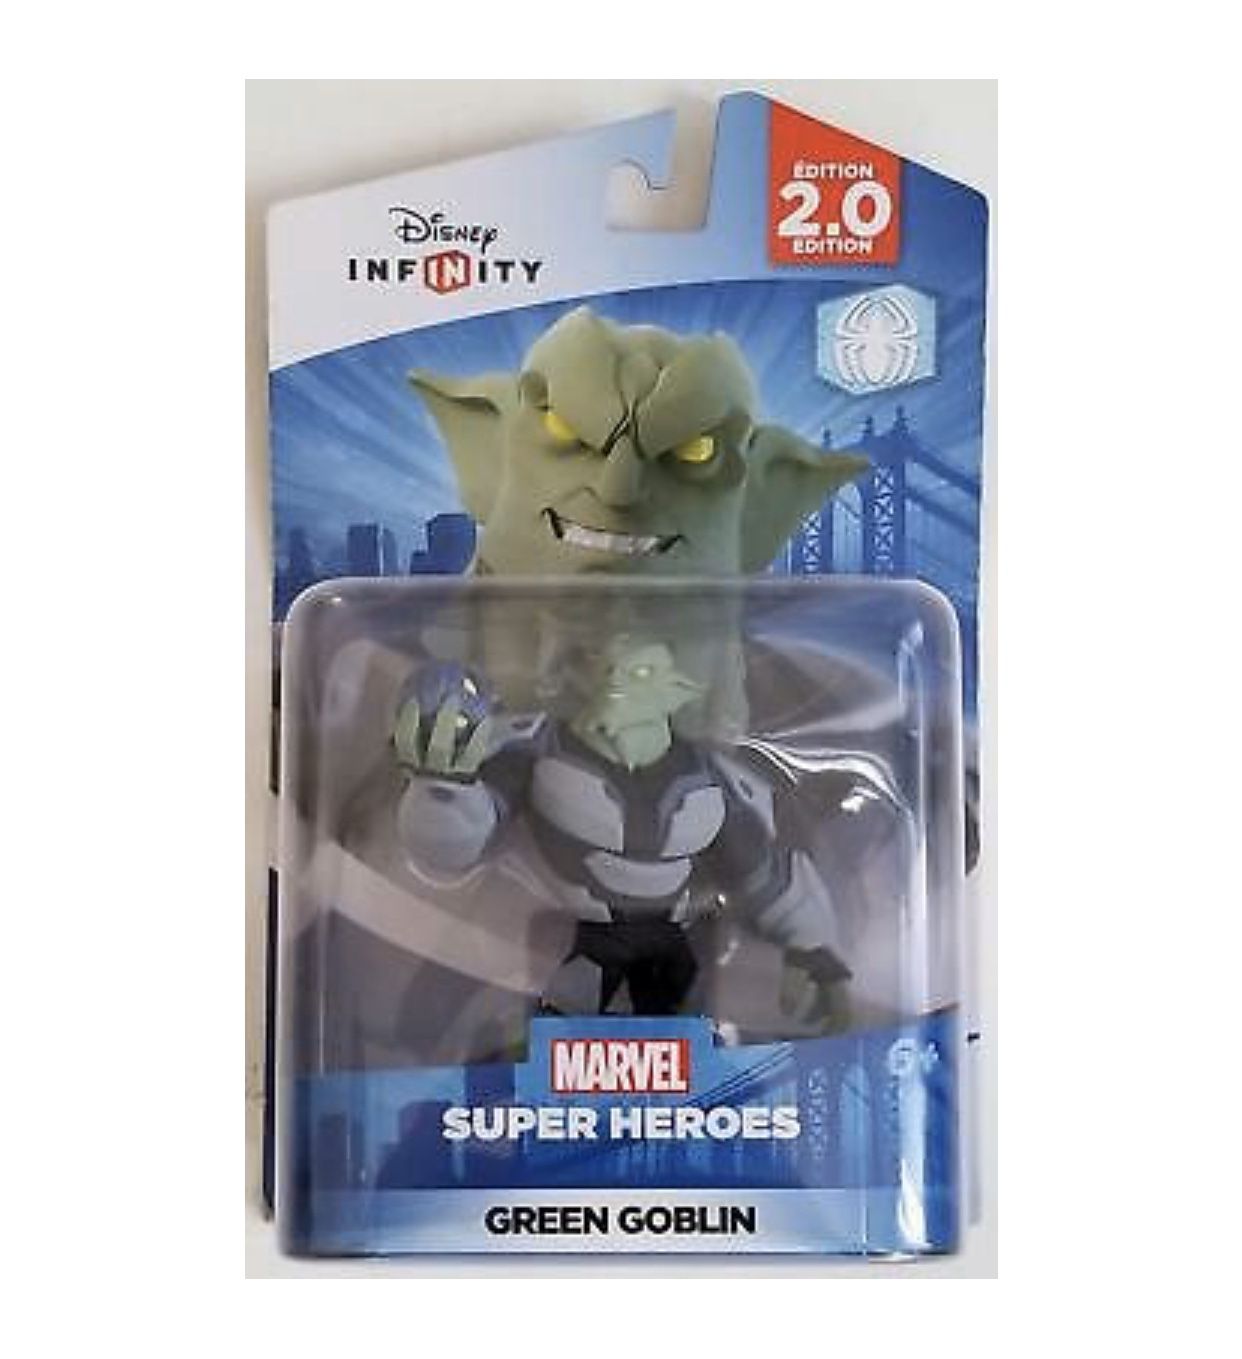 Disney Infinity: Marvel Super Heroes (2.0 Edition) Green Goblin Figure (Universal)